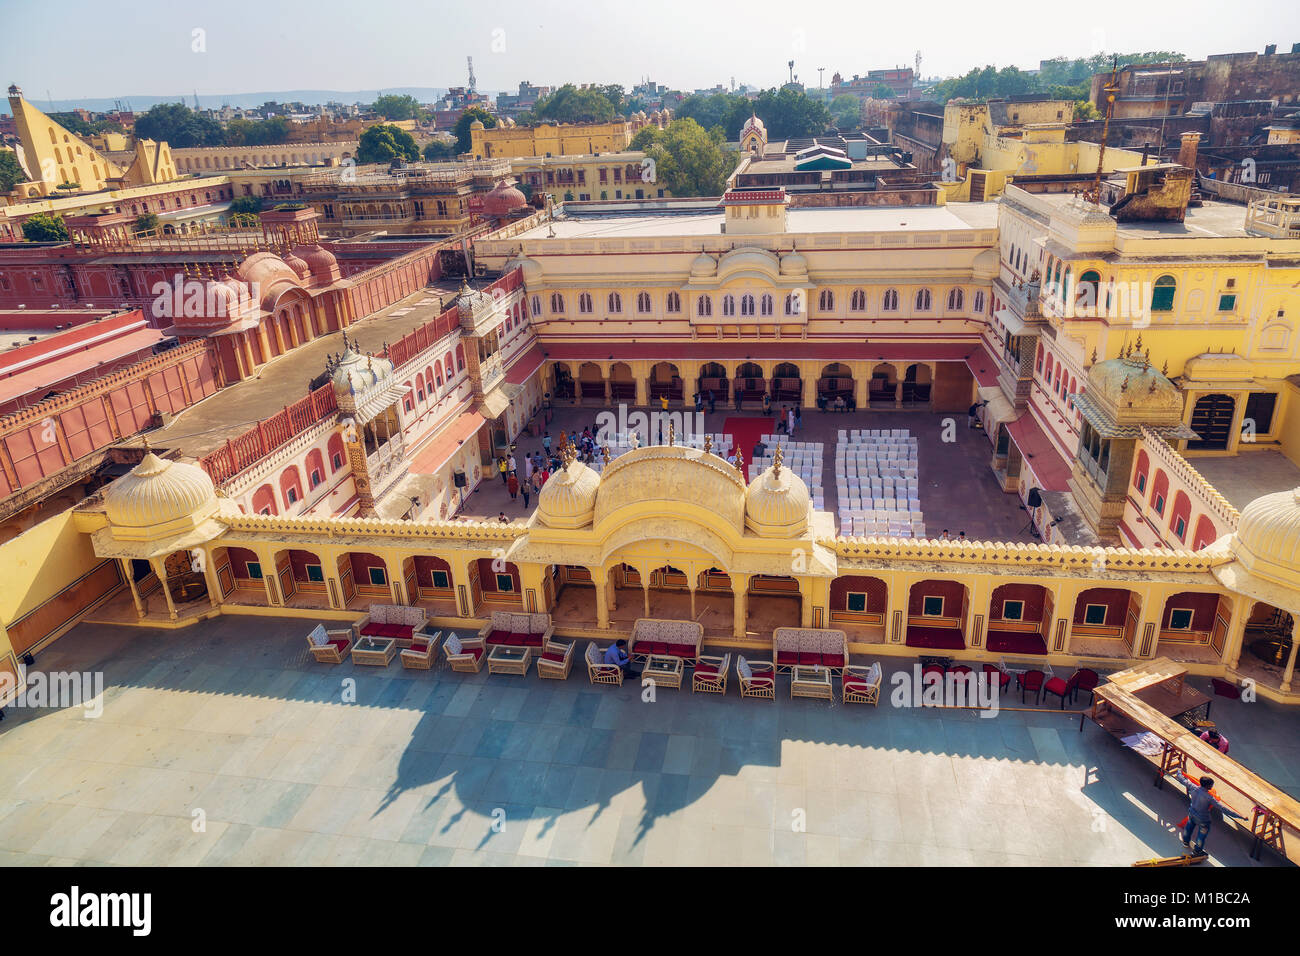 City Palace Jaipur Rajasthan - vista aerea del palazzo reale composto con vista del paesaggio urbano di Jaipur. Foto Stock